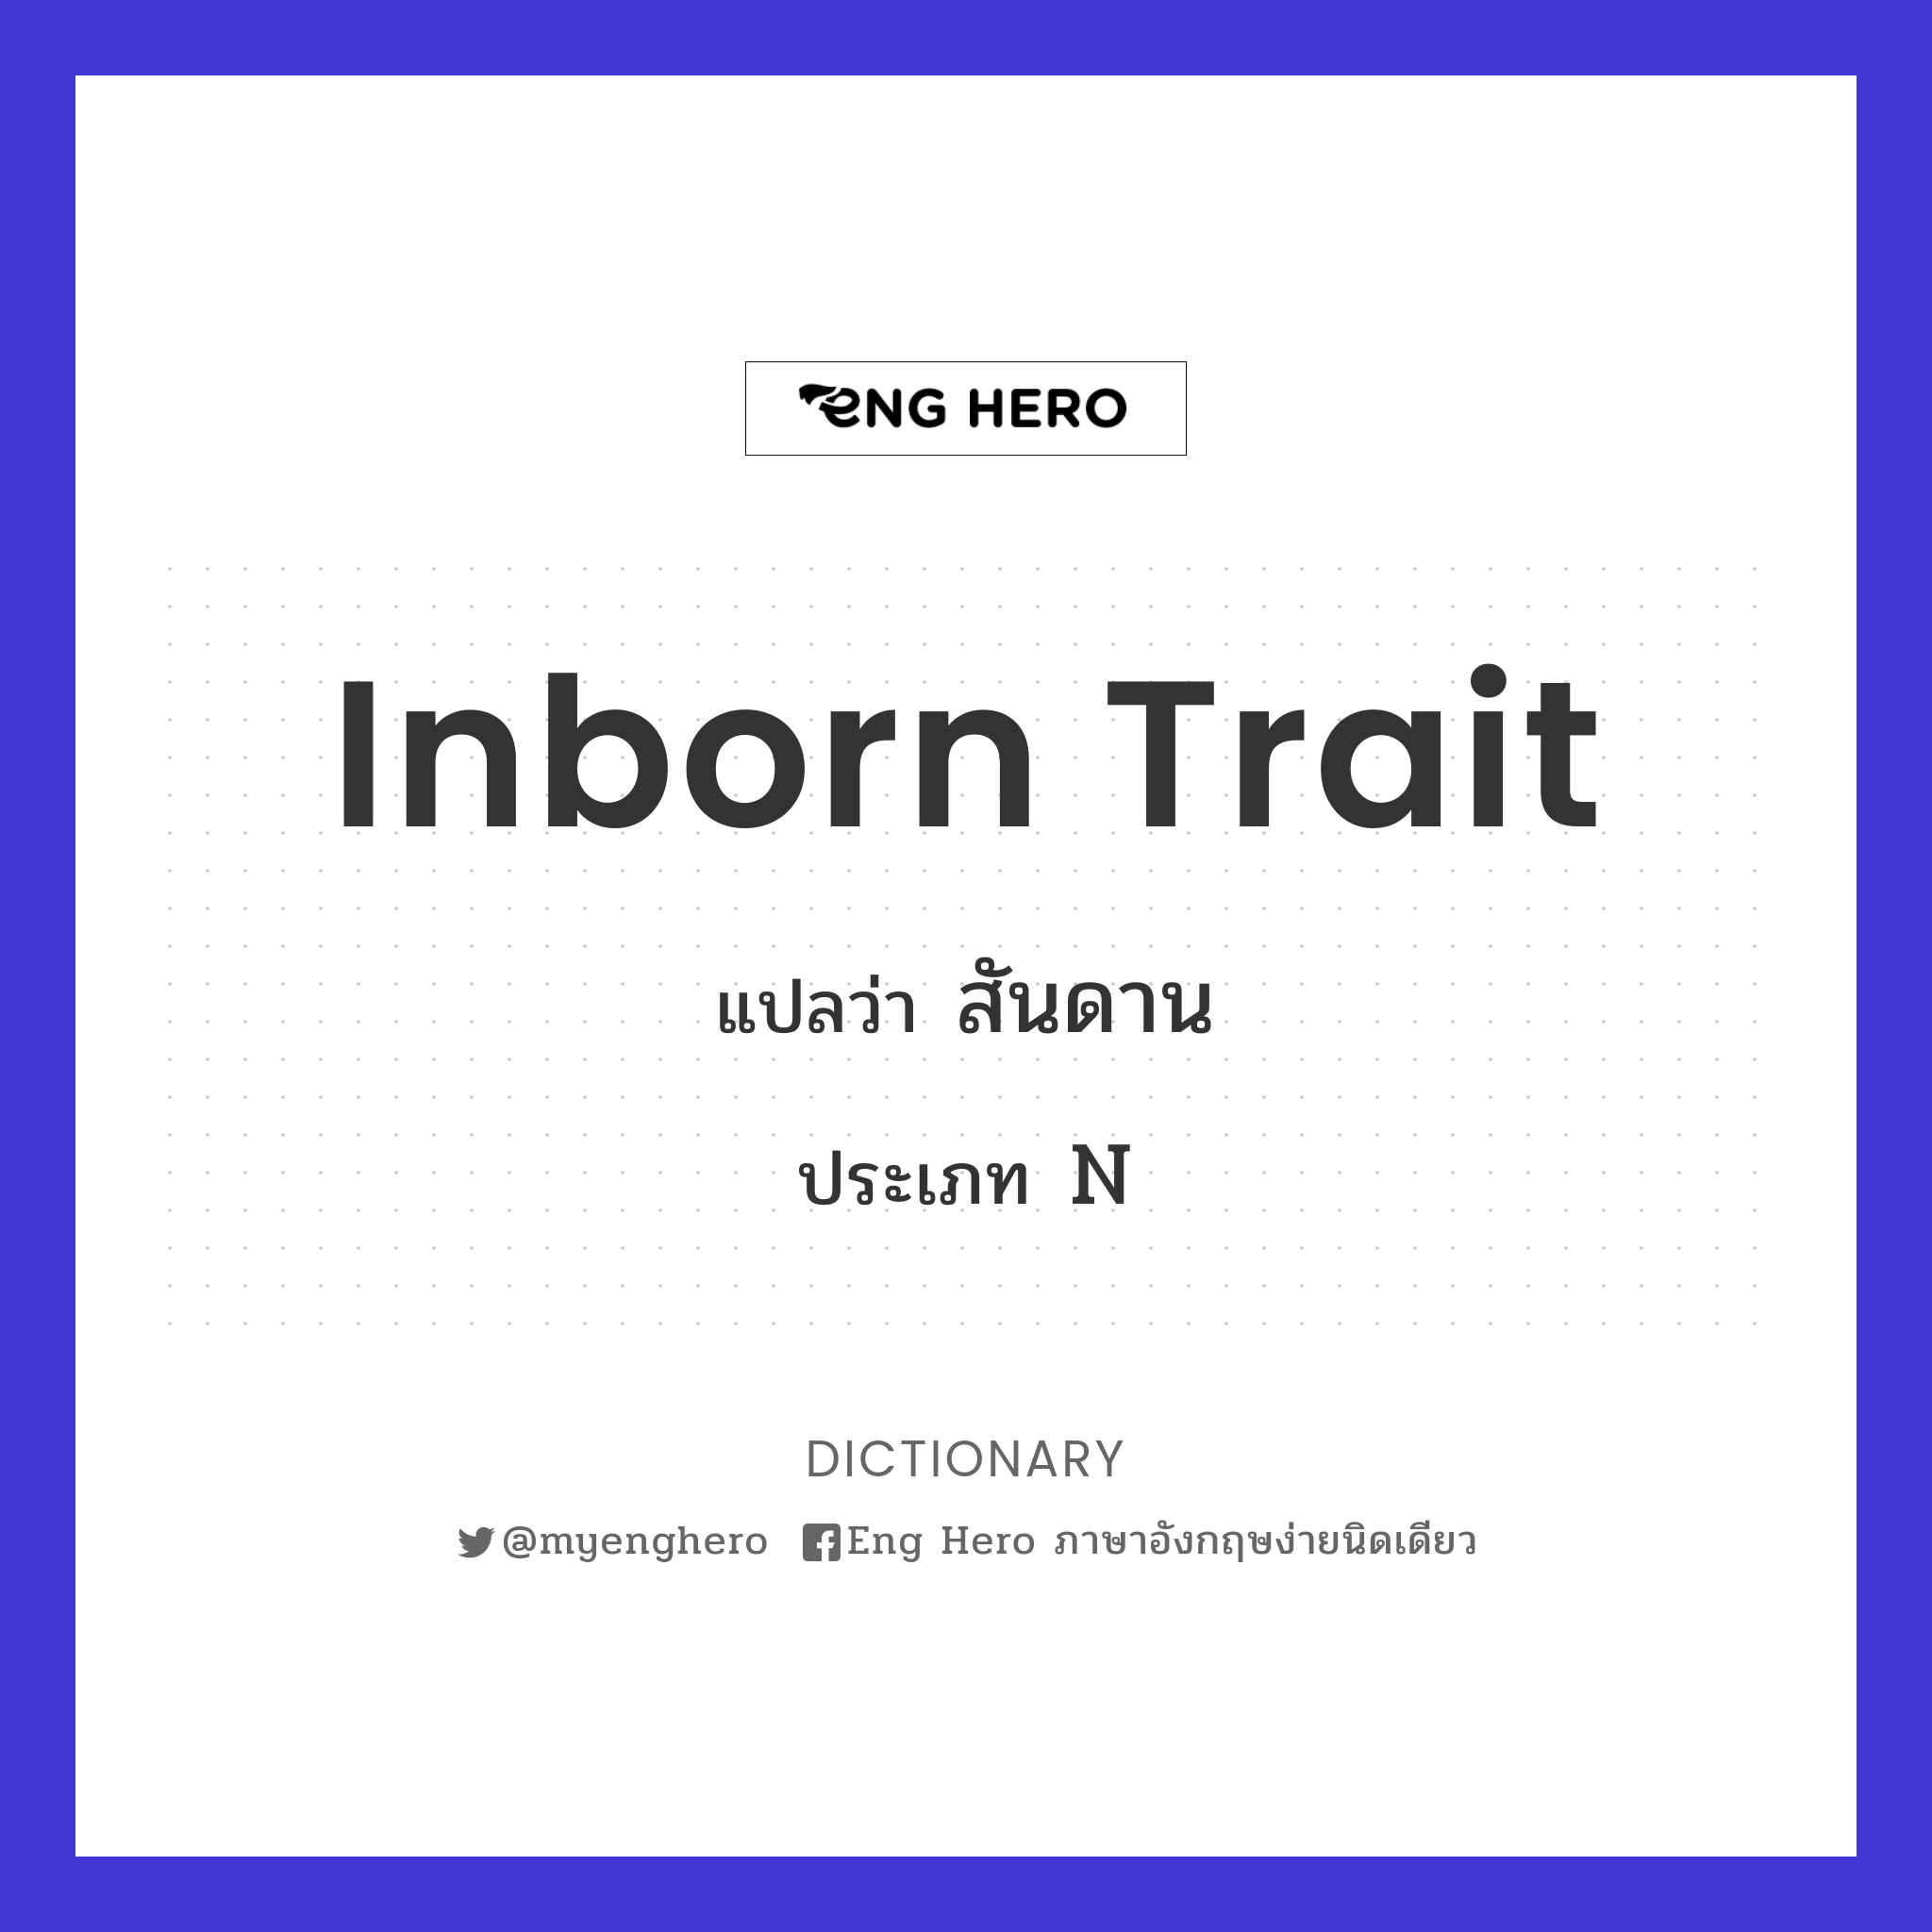 inborn trait